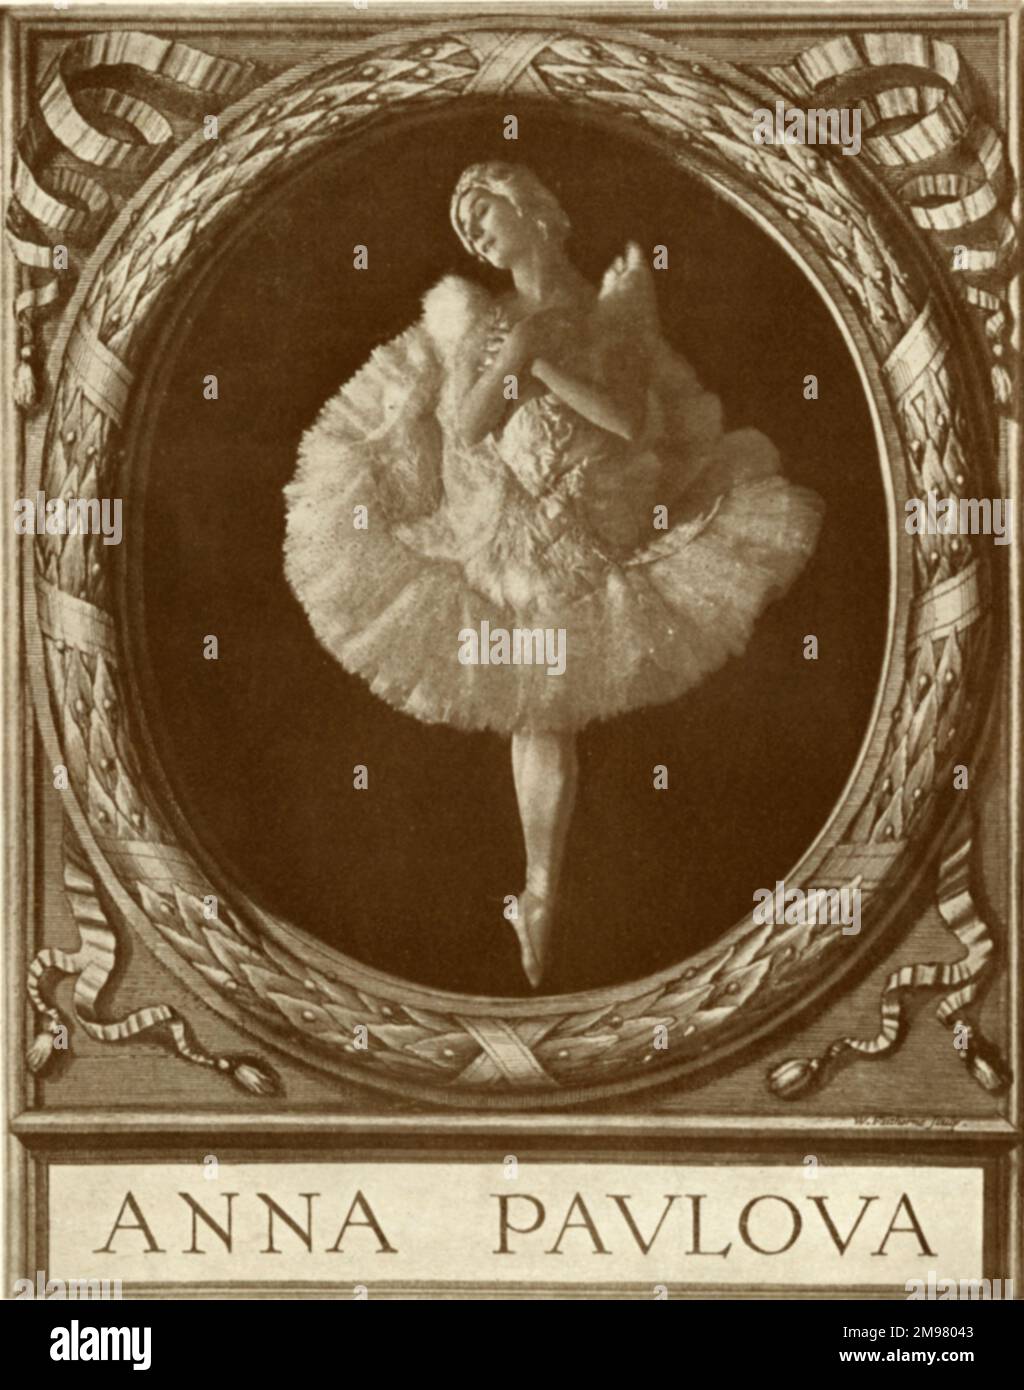 Anna Pavlova, Russian ballerina, in Swan Lake. Stock Photo